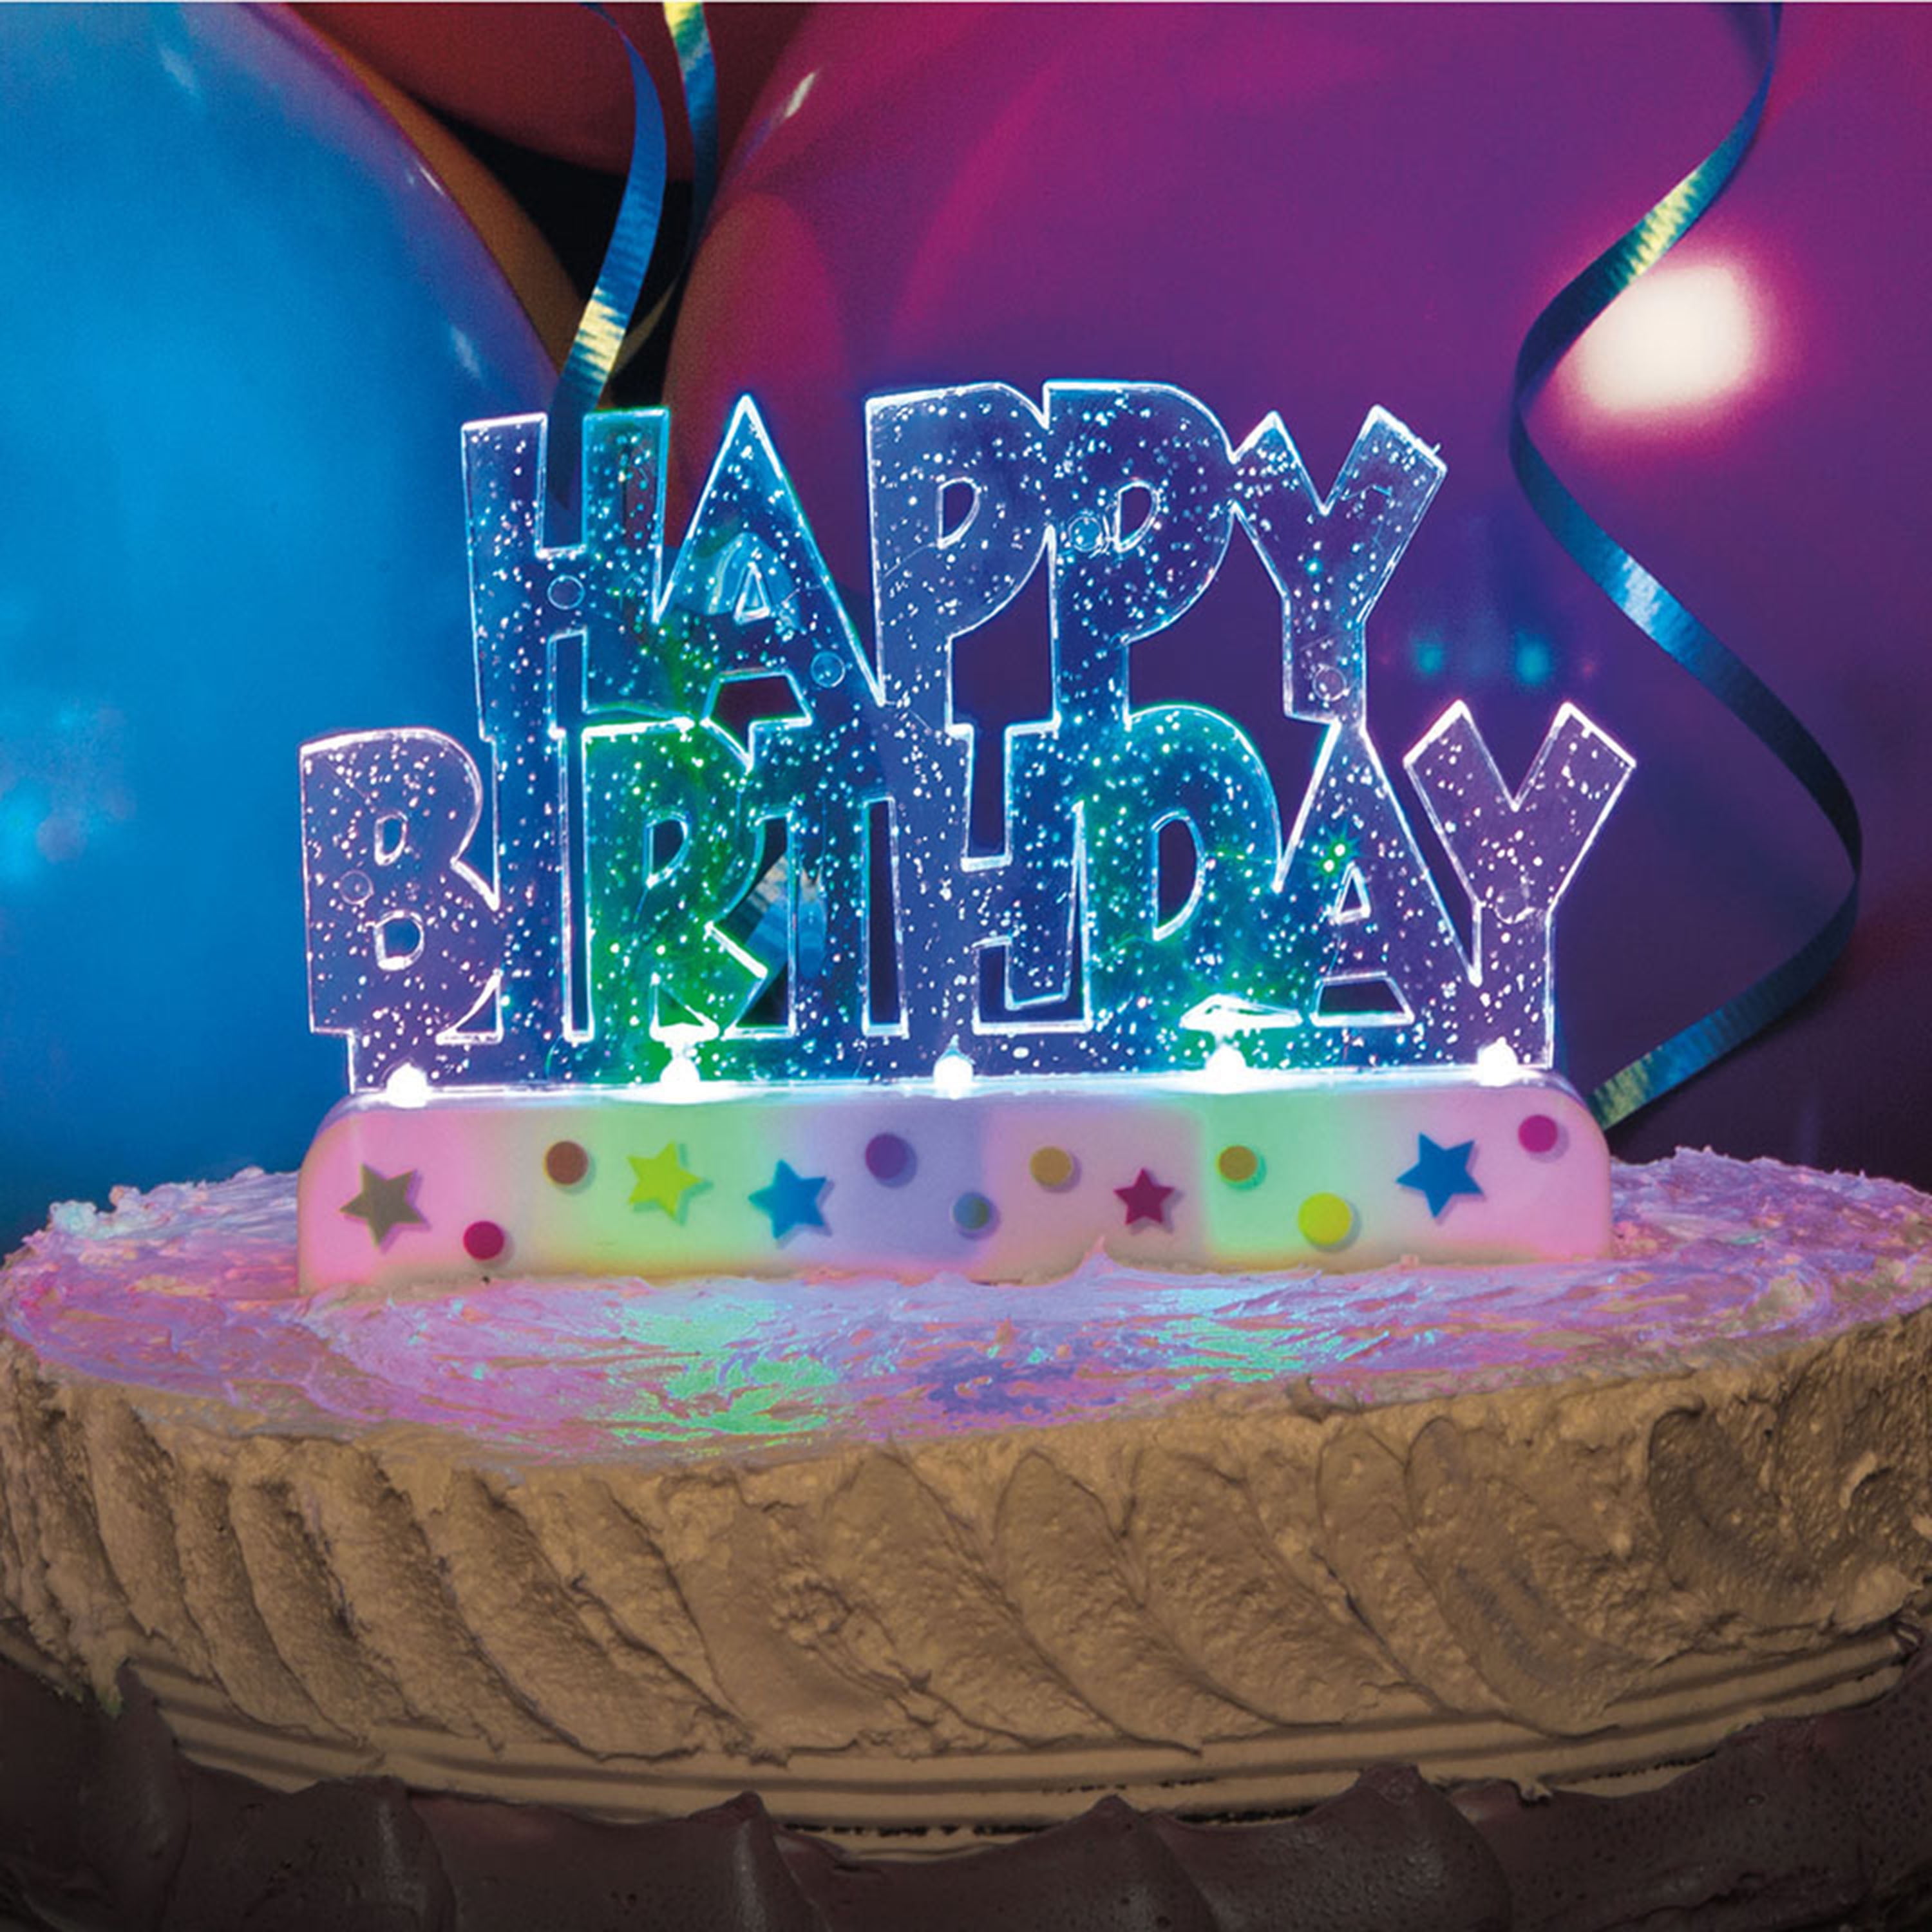 The Flash Cake Design Images (The Flash Birthday Cake Ideas) | Flash  birthday cake, Flash cake, Chocolate cake designs